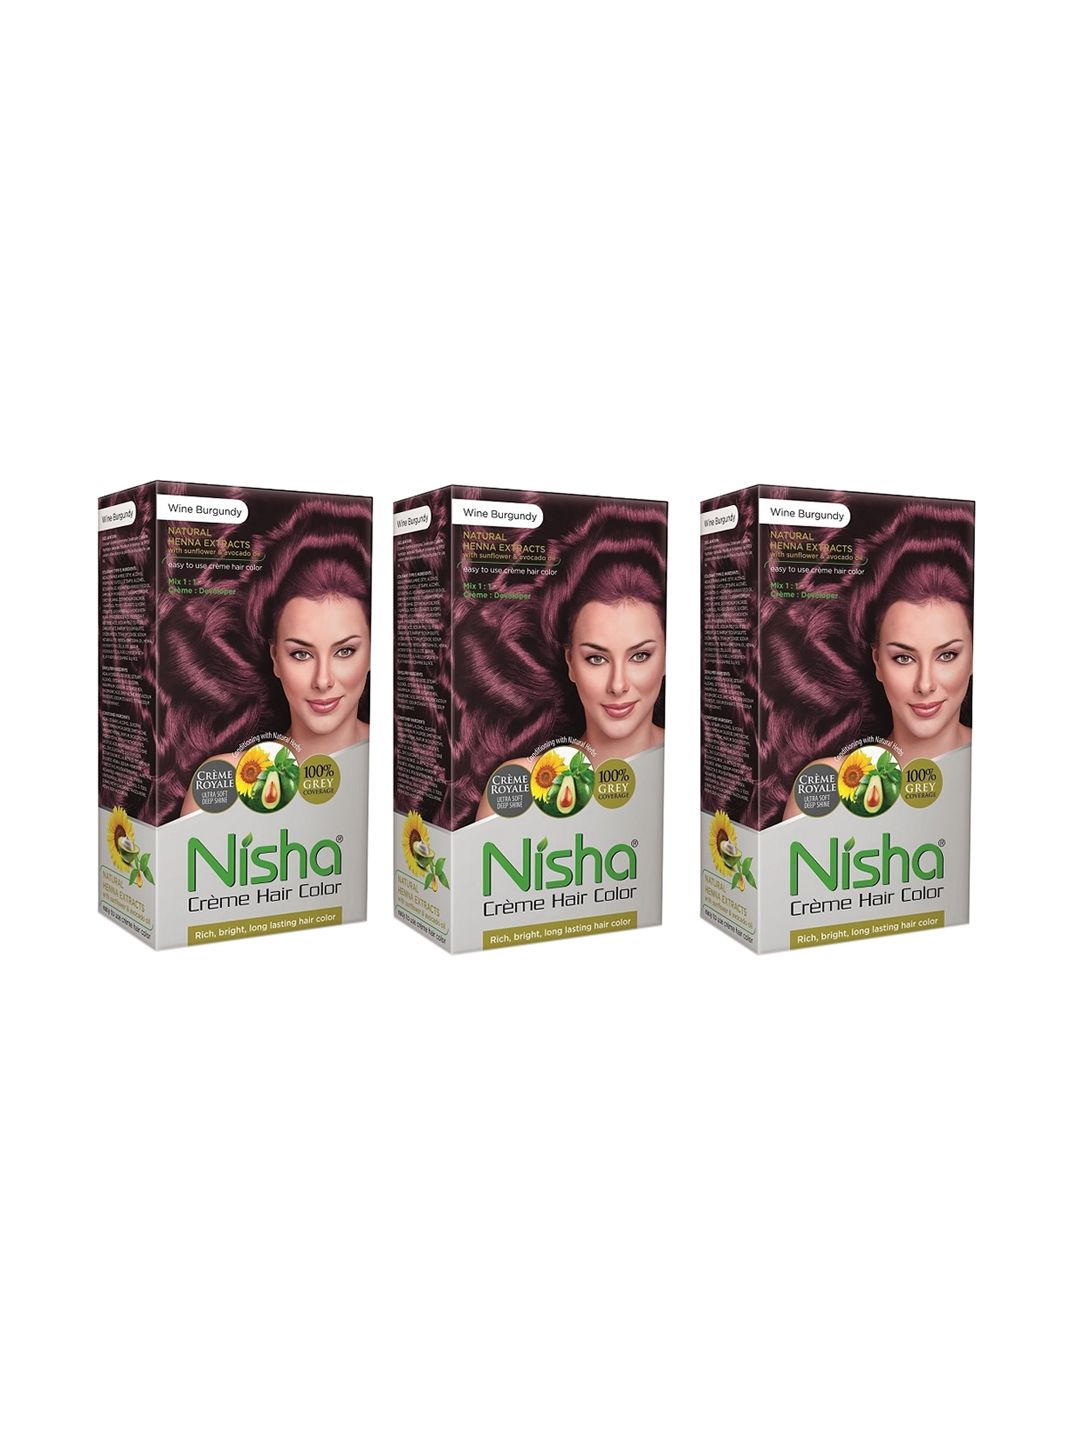 Nisha Unisex Burgundy Pack of 3 Creme Hair Color 120gm each- Wine Burgundy Price in India